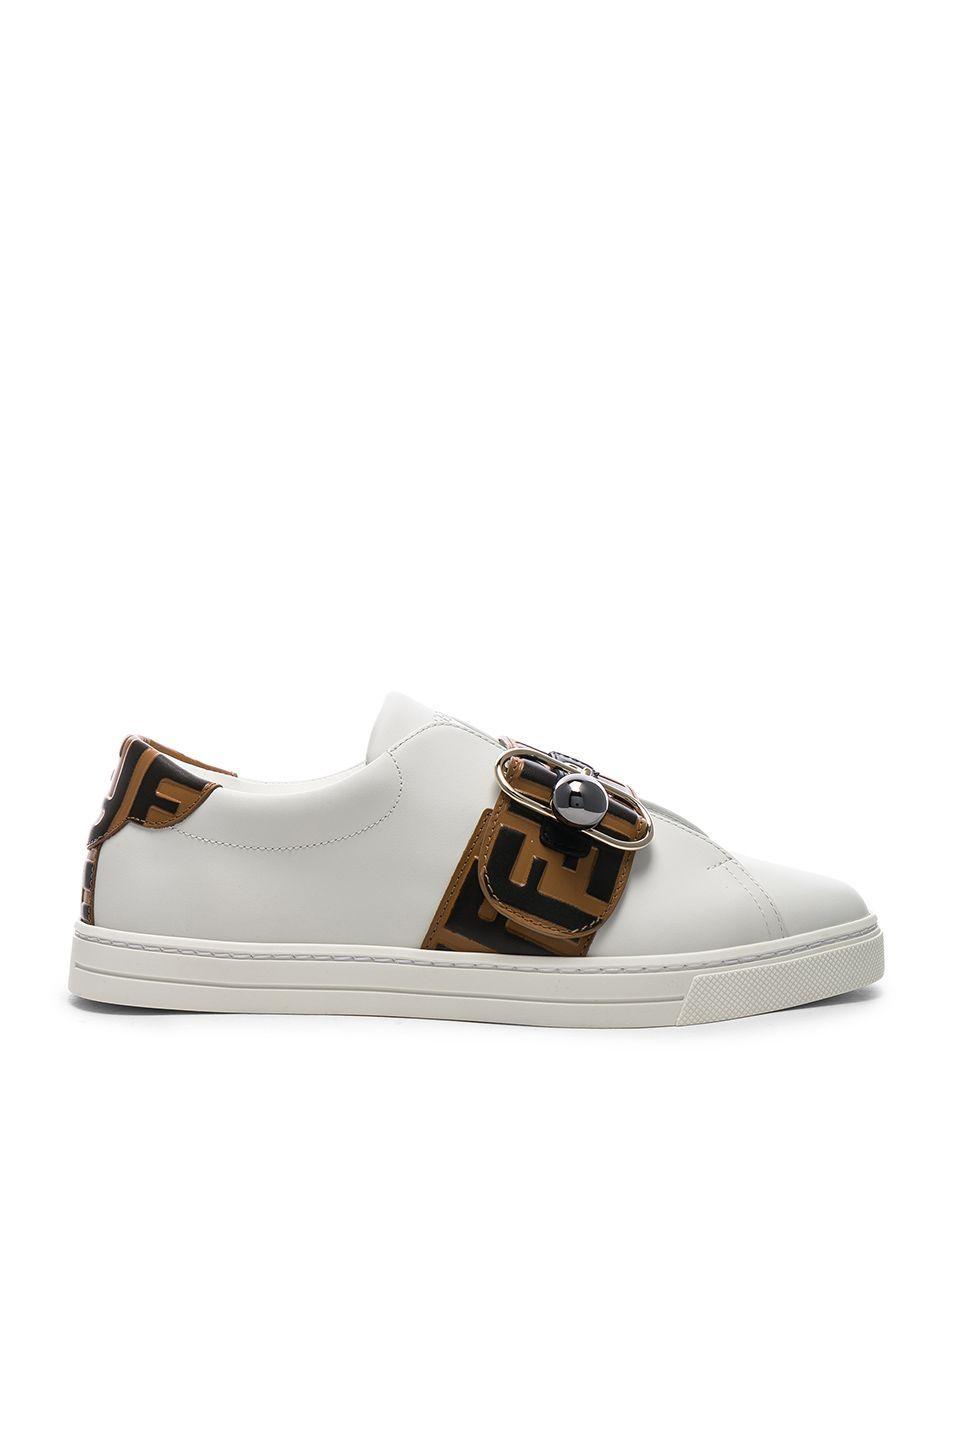 Expensive Shoe Logo - Fendi Logo Print Buckle Strap Sneakers in White, Black & Brown